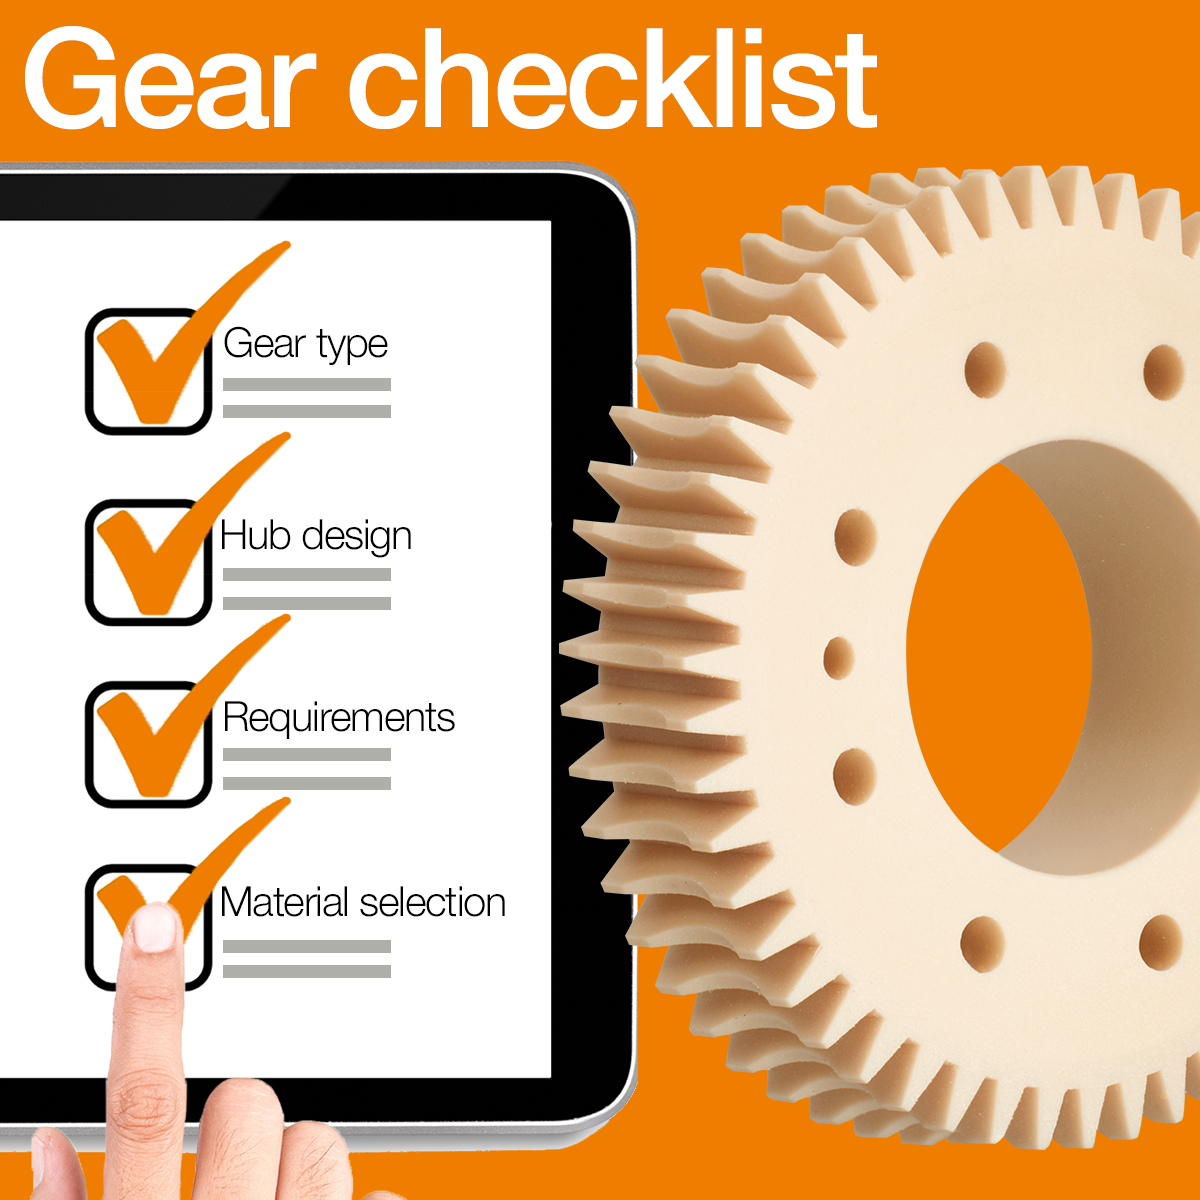 Gear checklist